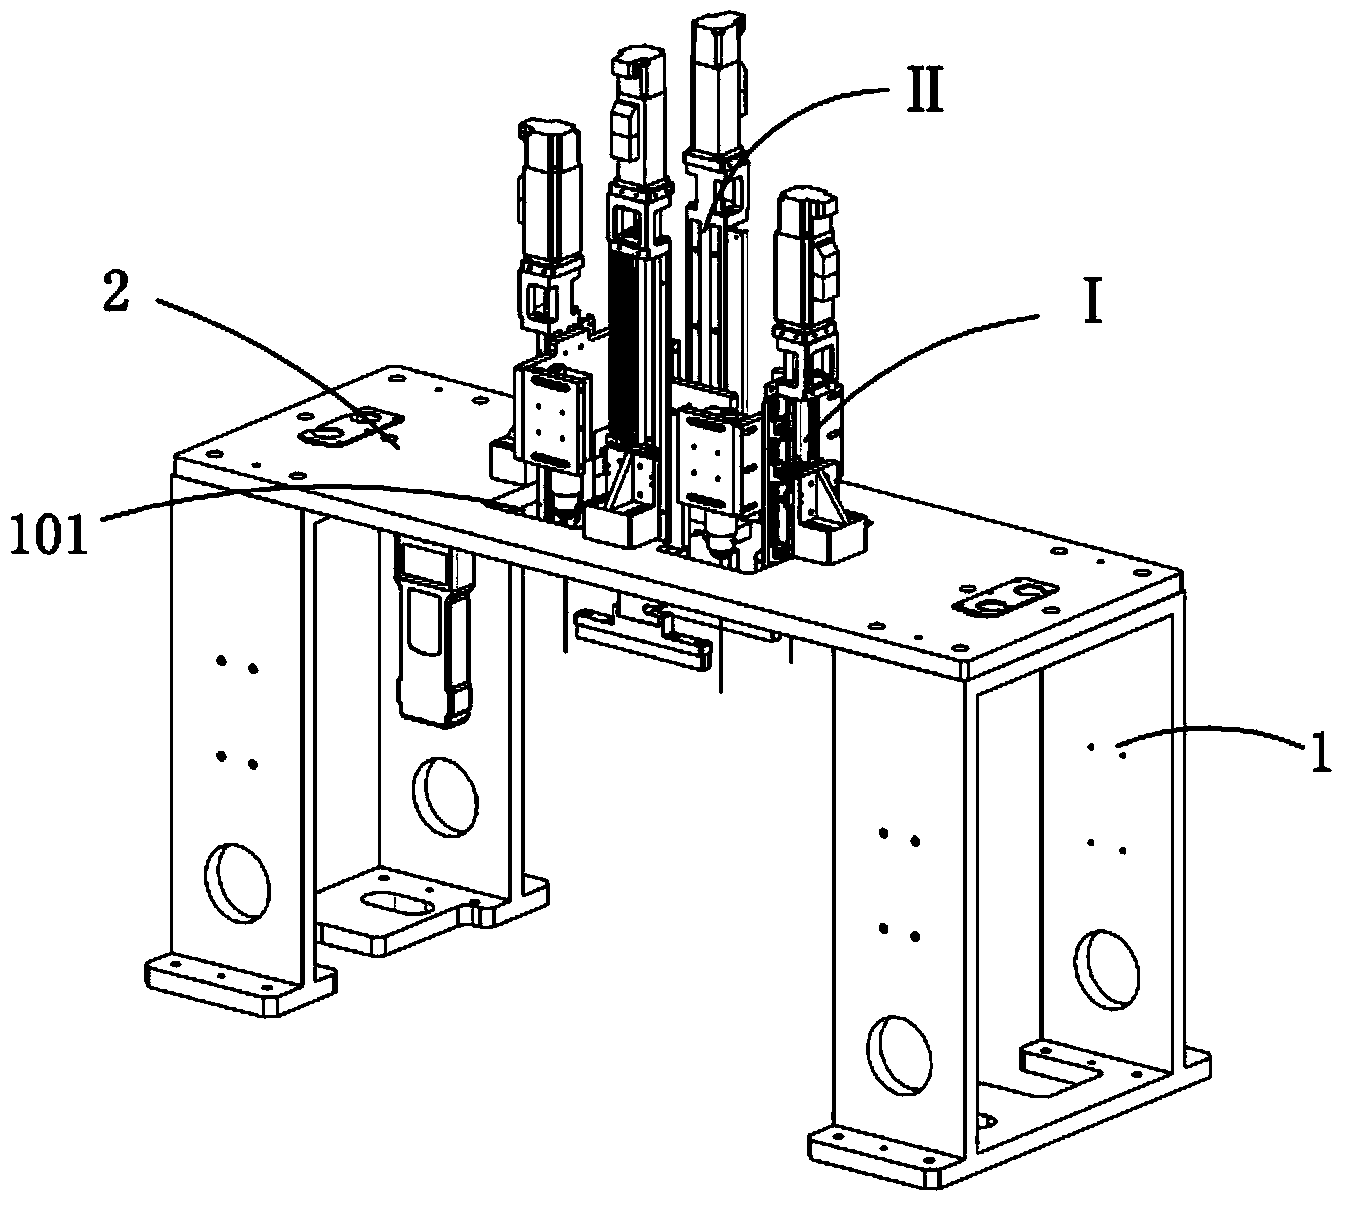 Alignment press-fit mechanism